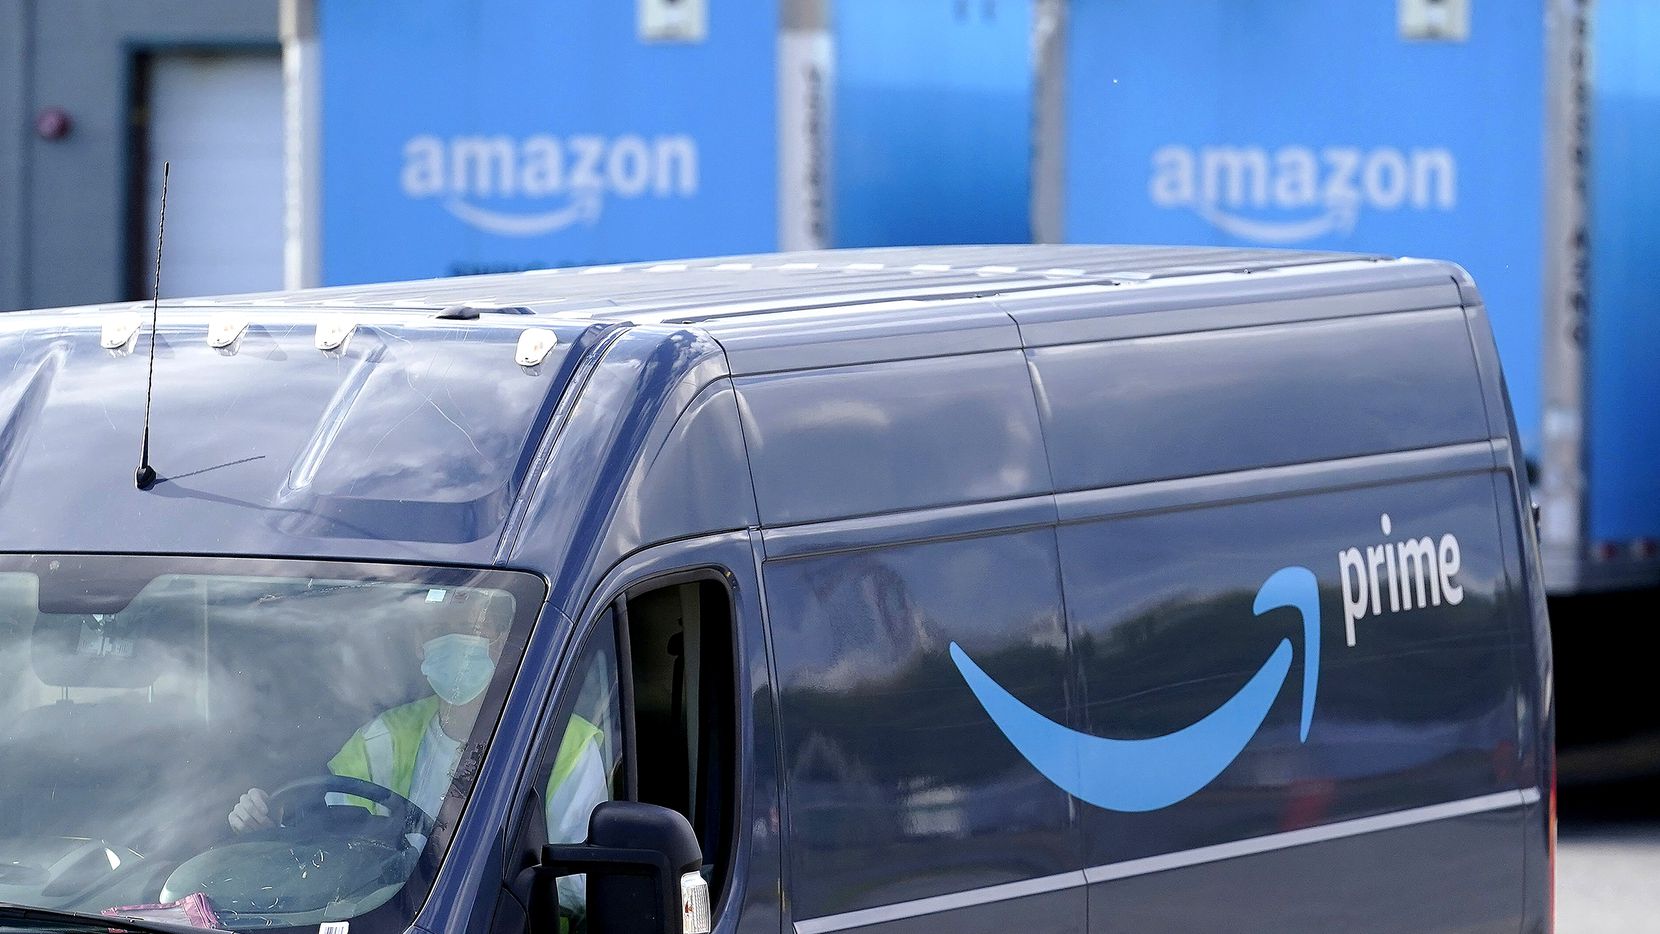 Amazon has reported quarterly revenue of $100 billion or more for five straight quarters.